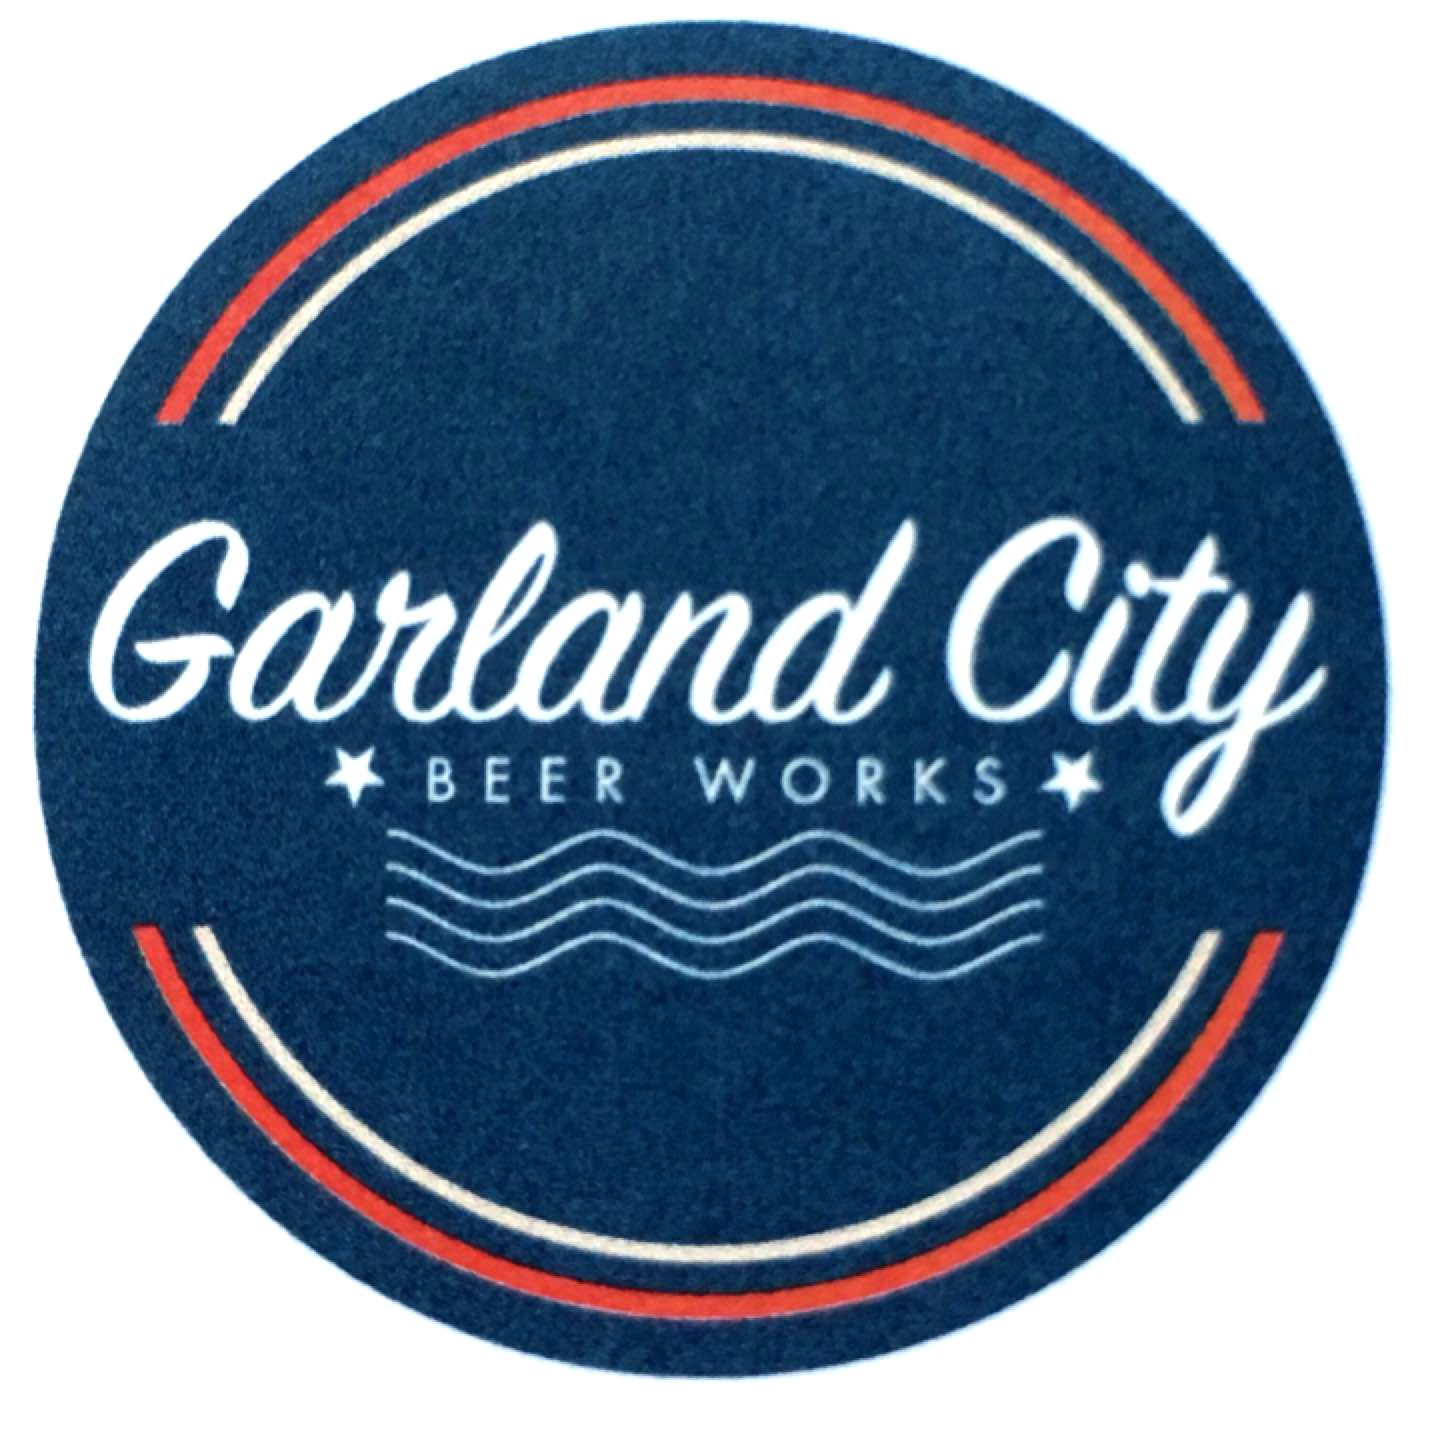 Garland City Beer Works